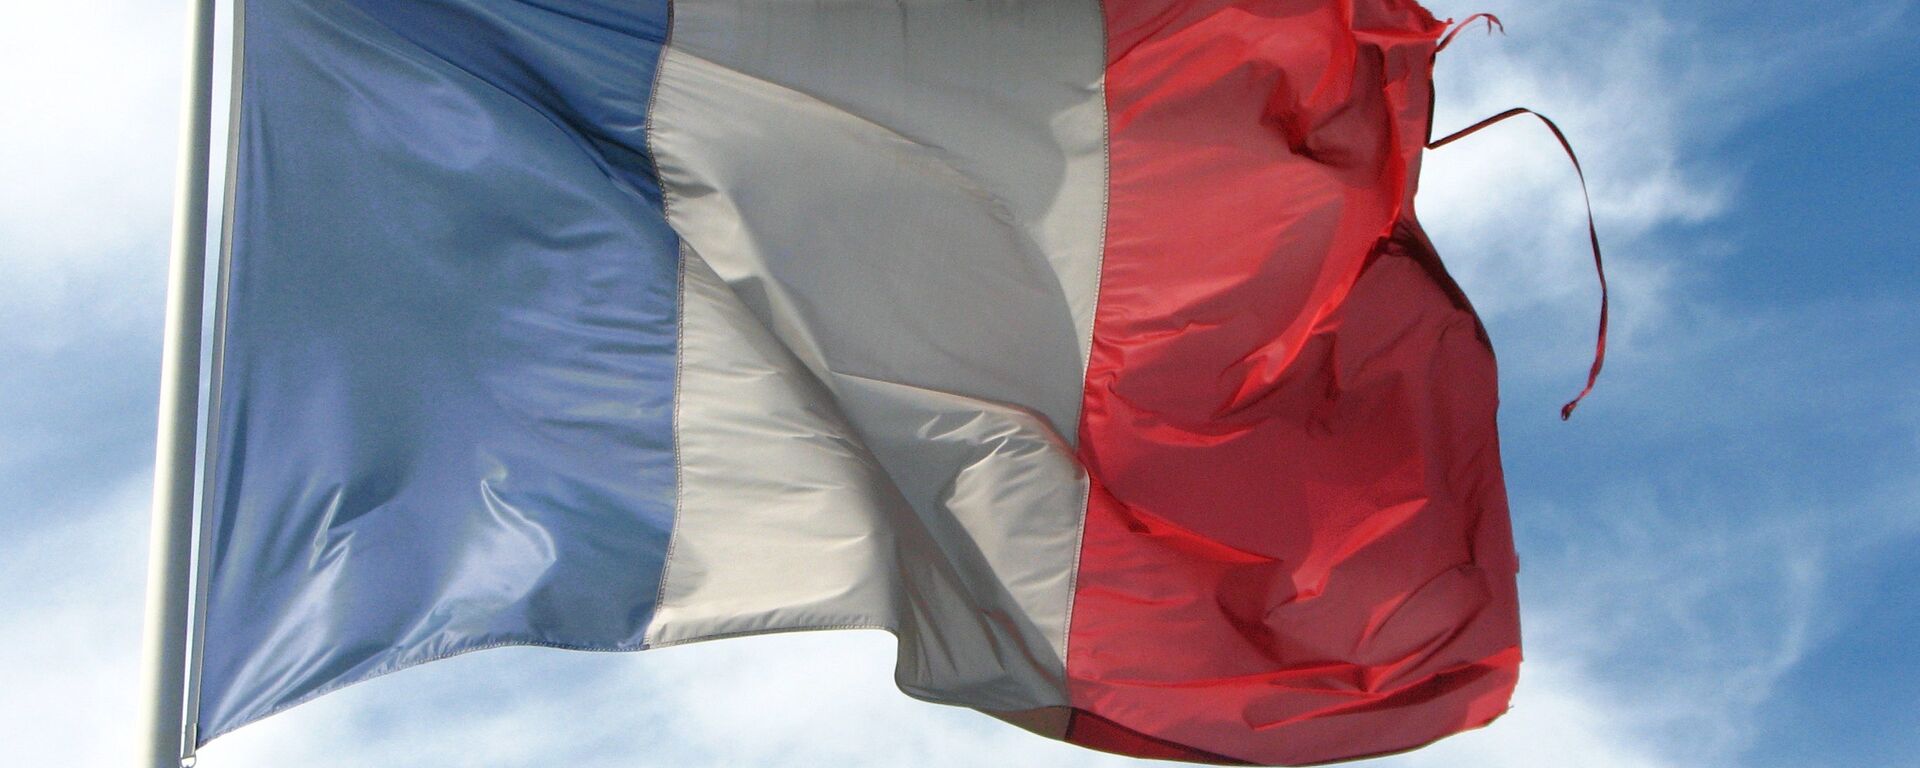 La bandera de Francia - Sputnik Mundo, 1920, 25.11.2021